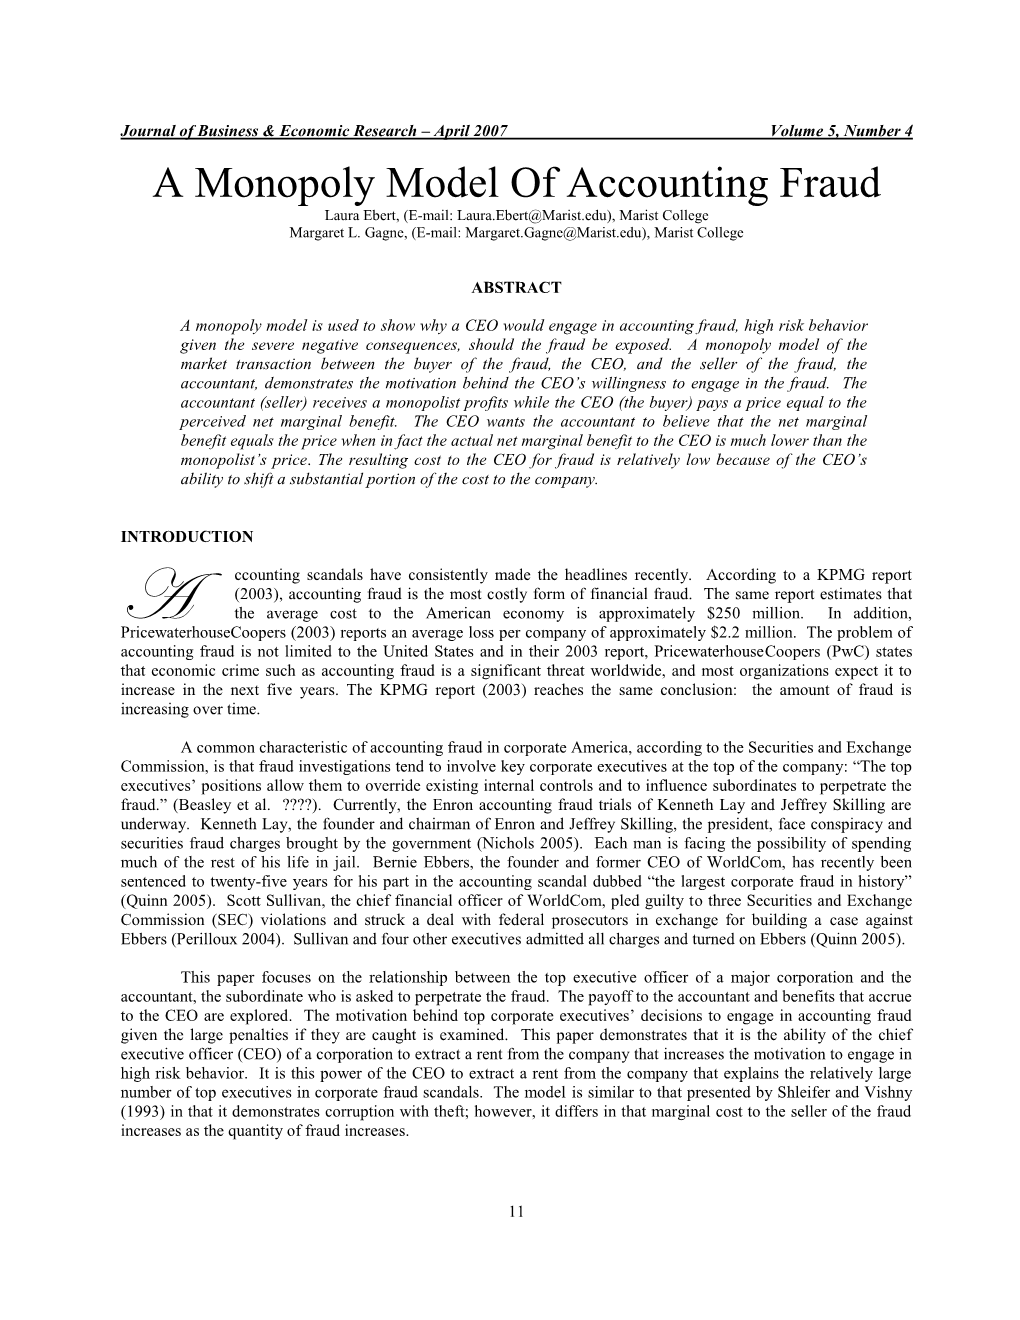 A Monopoly Model of Accounting Fraud Laura Ebert, (E-Mail: Laura.Ebert@Marist.Edu), Marist College Margaret L